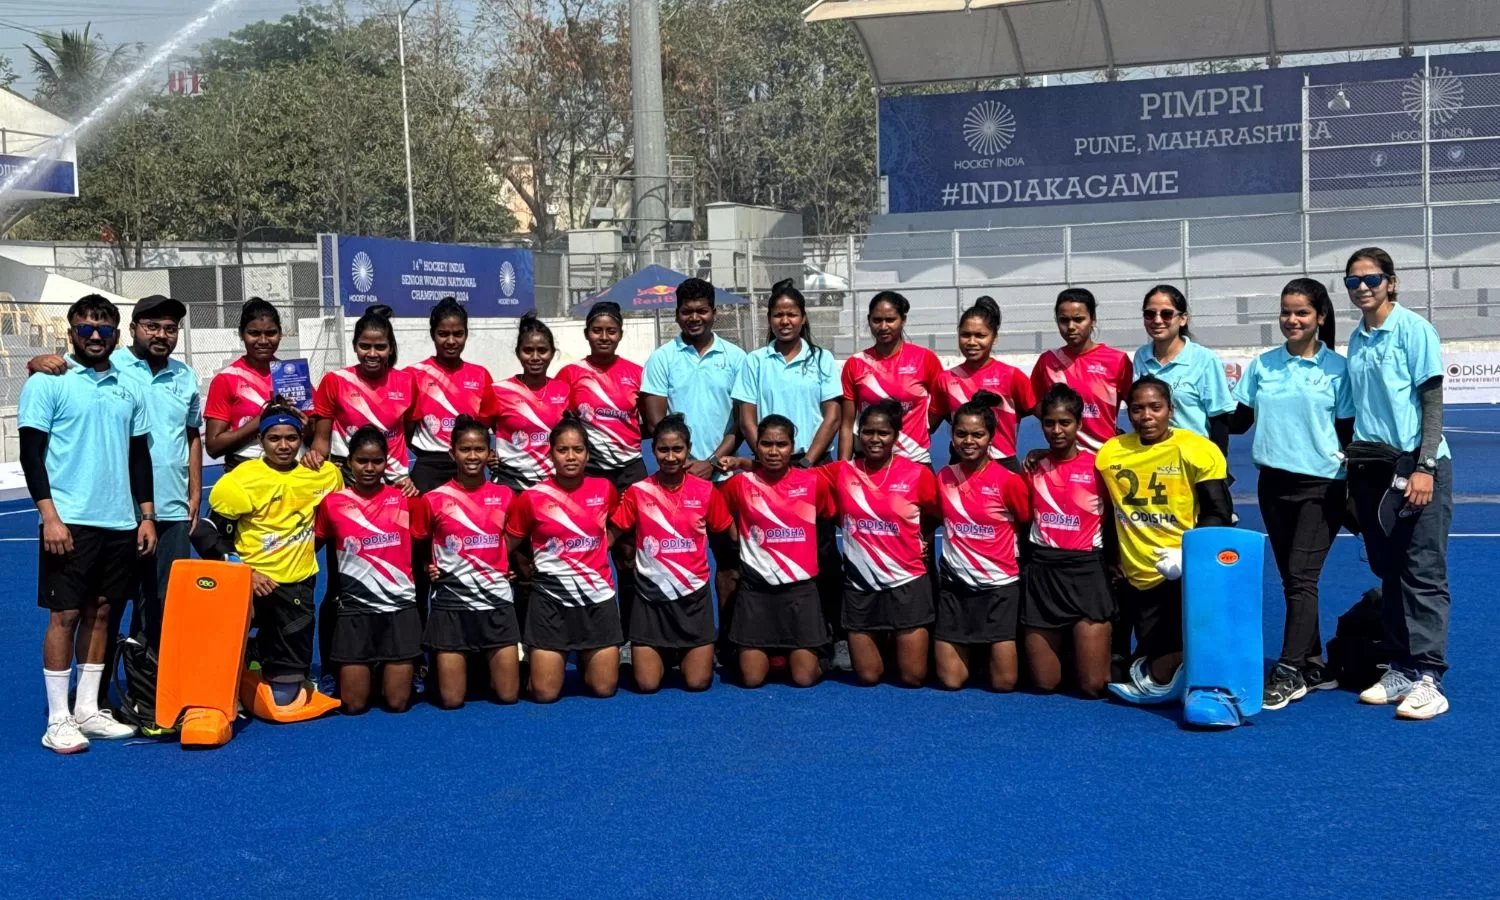 Coach Lakra to girls ahead of Haryana clash